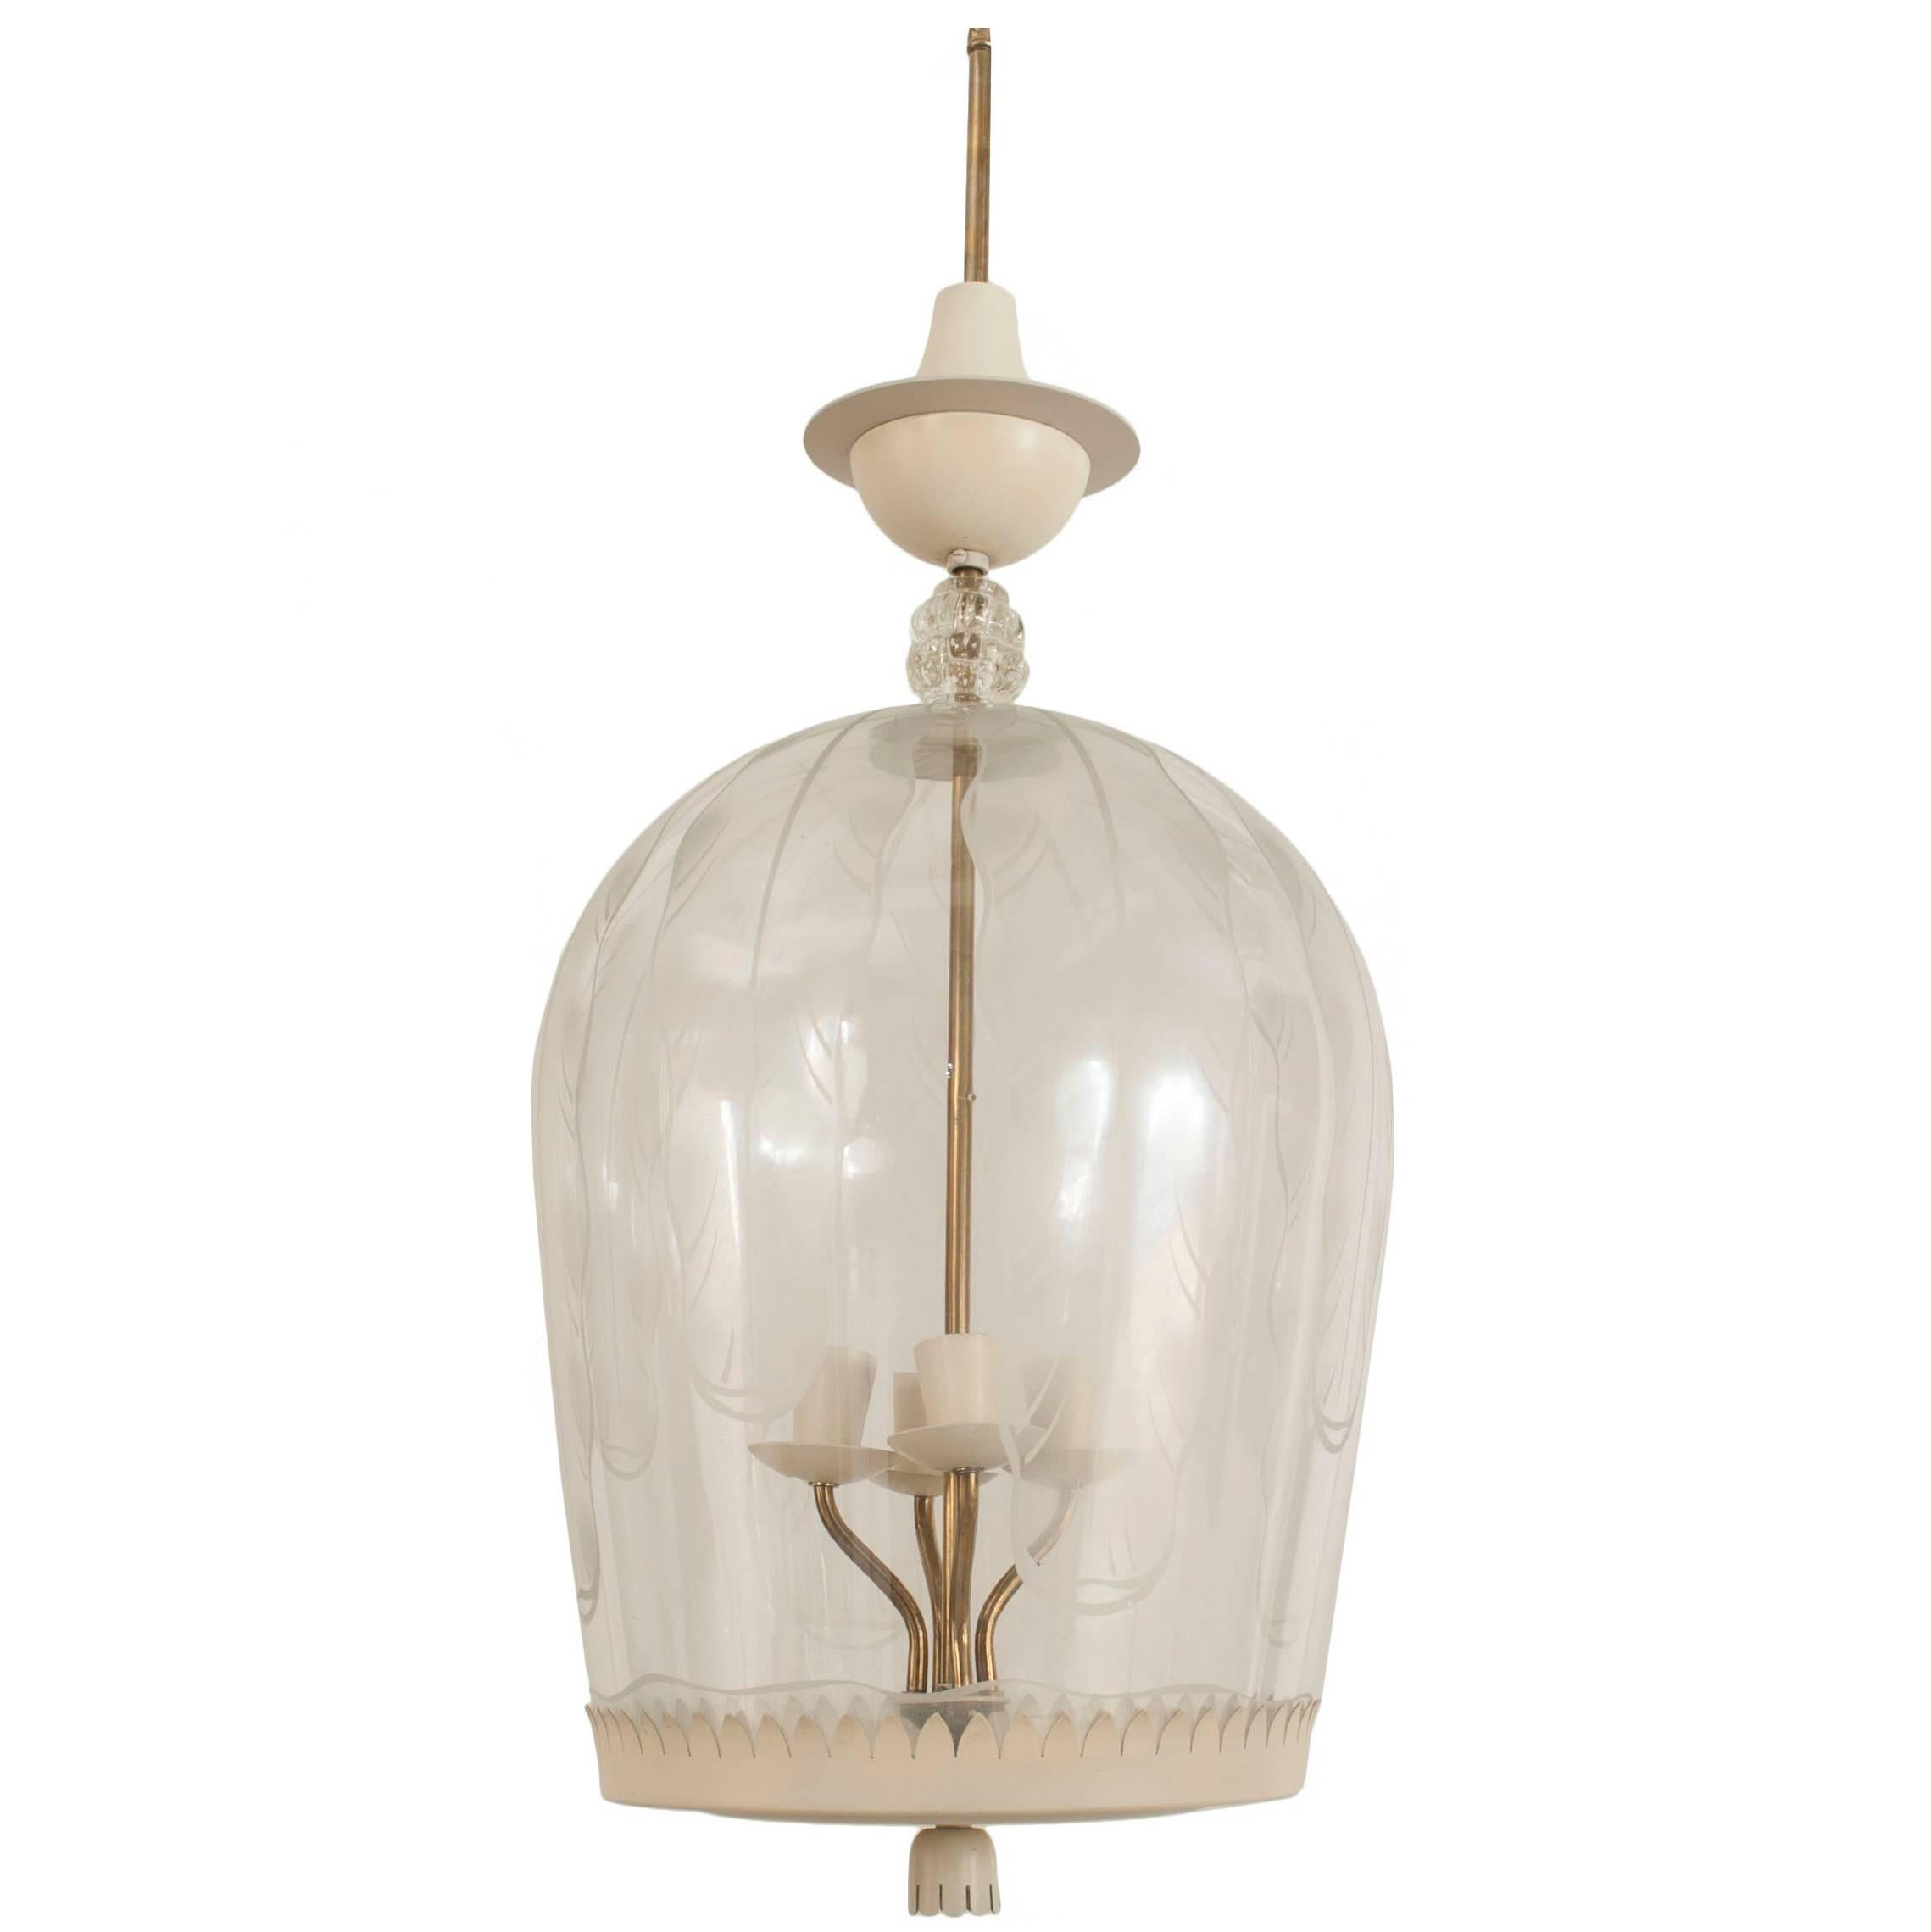 Italian Mid-Century Fontana Arte Glass Dome Lantern